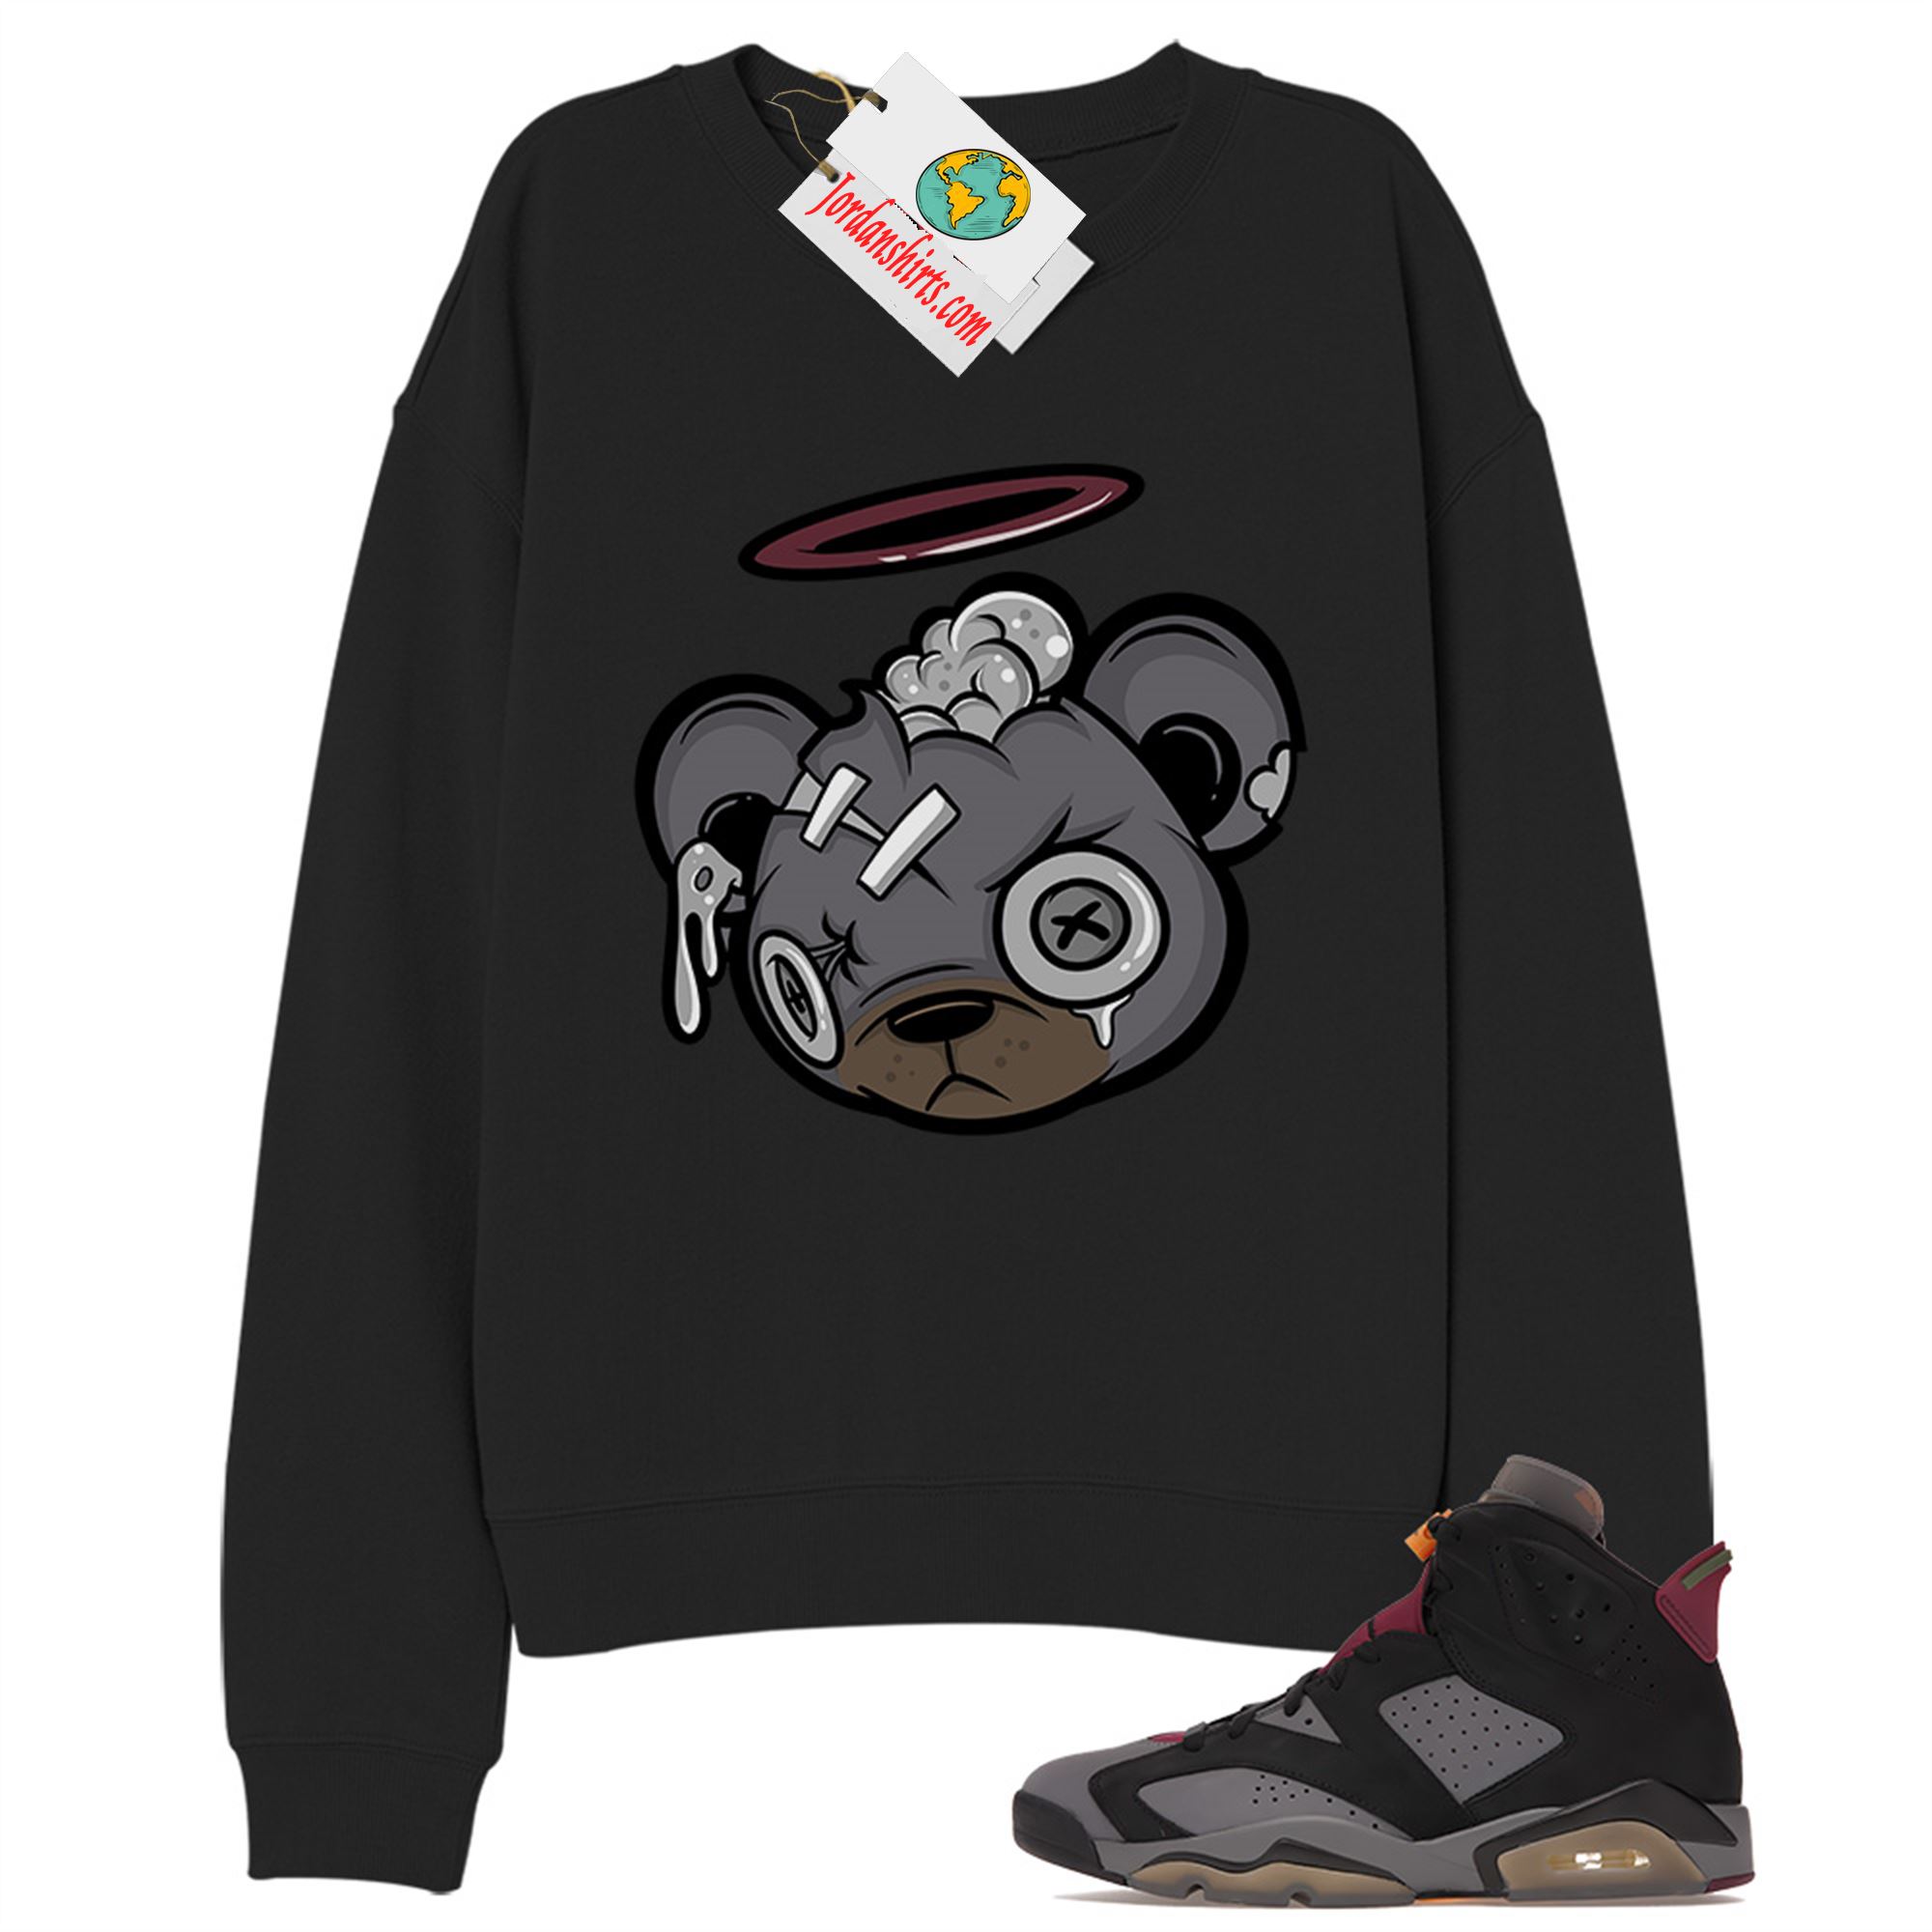 Jordan 6 Sweatshirt, Teddy Bear With Angel Ring Black Sweatshirt Air Jordan 6 Bordeaux 6s Full Size Up To 5xl